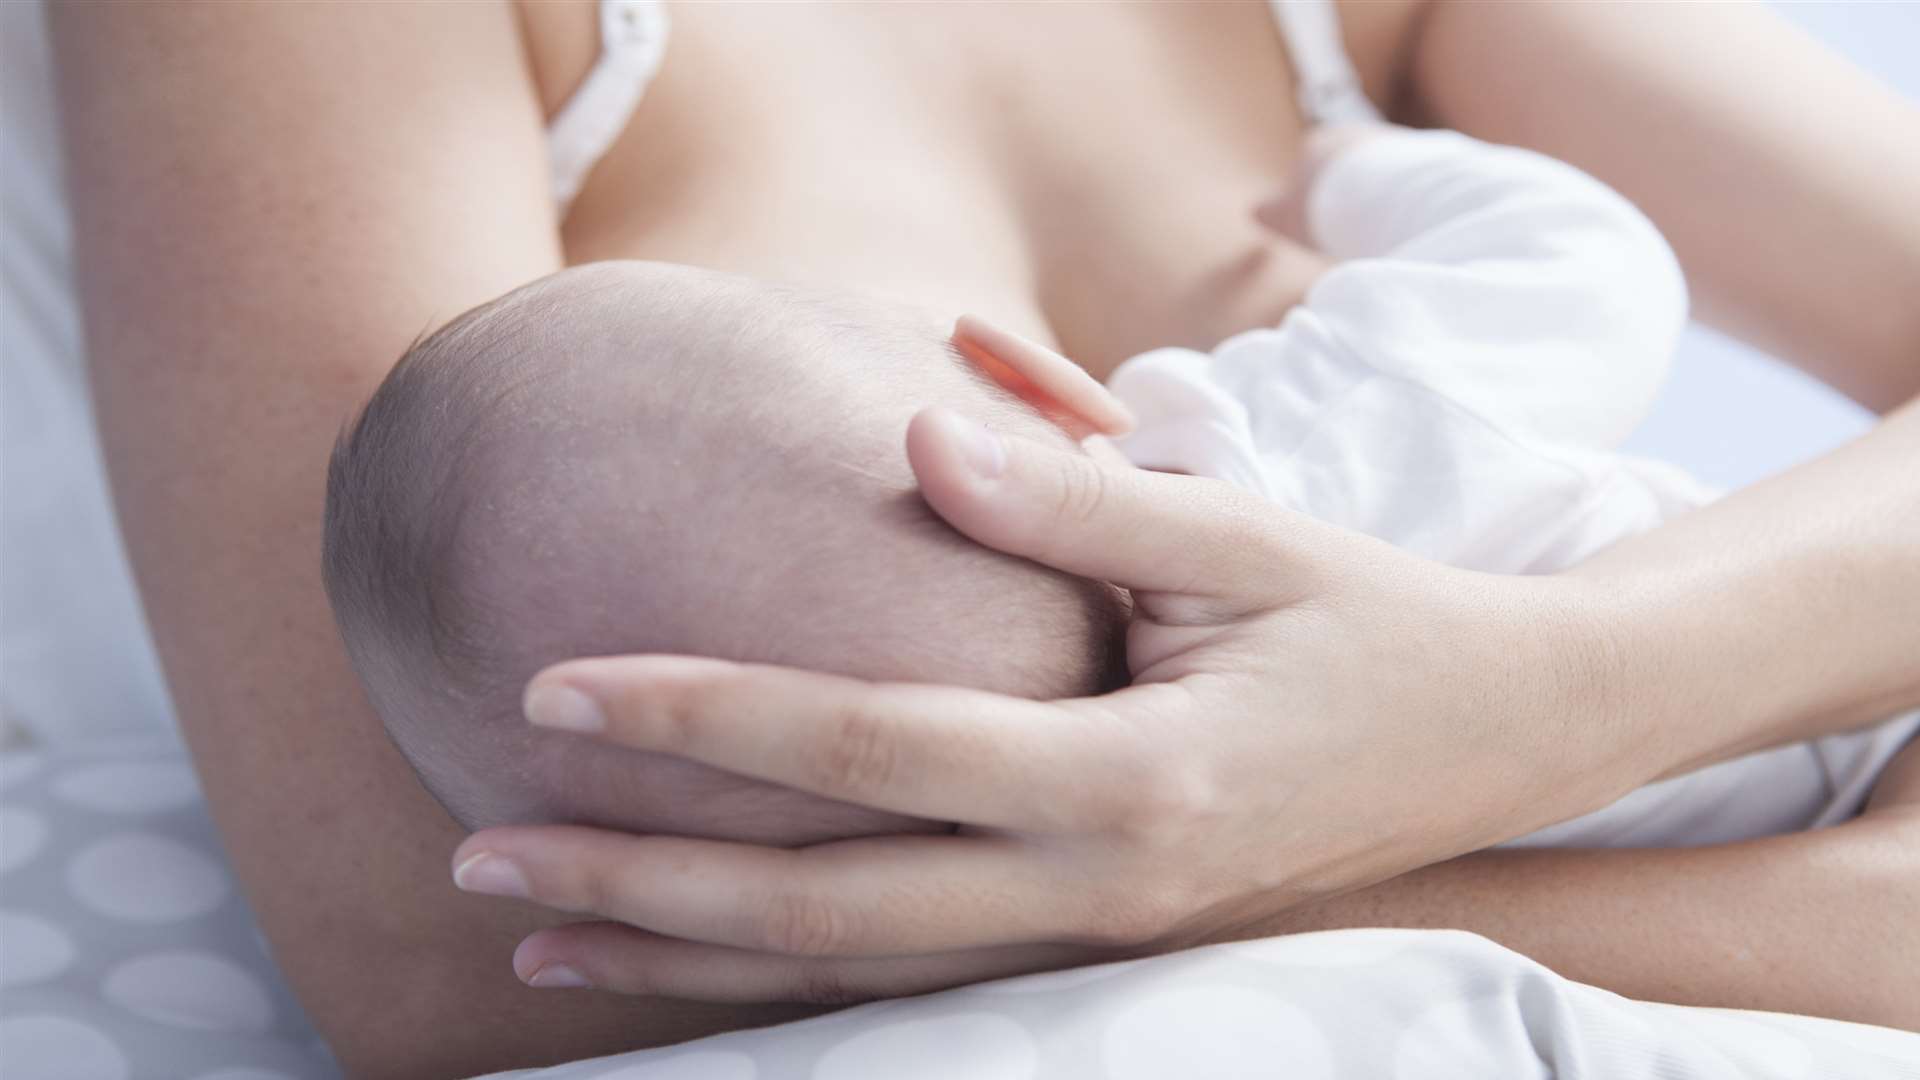 Breastfeeding is encouraged